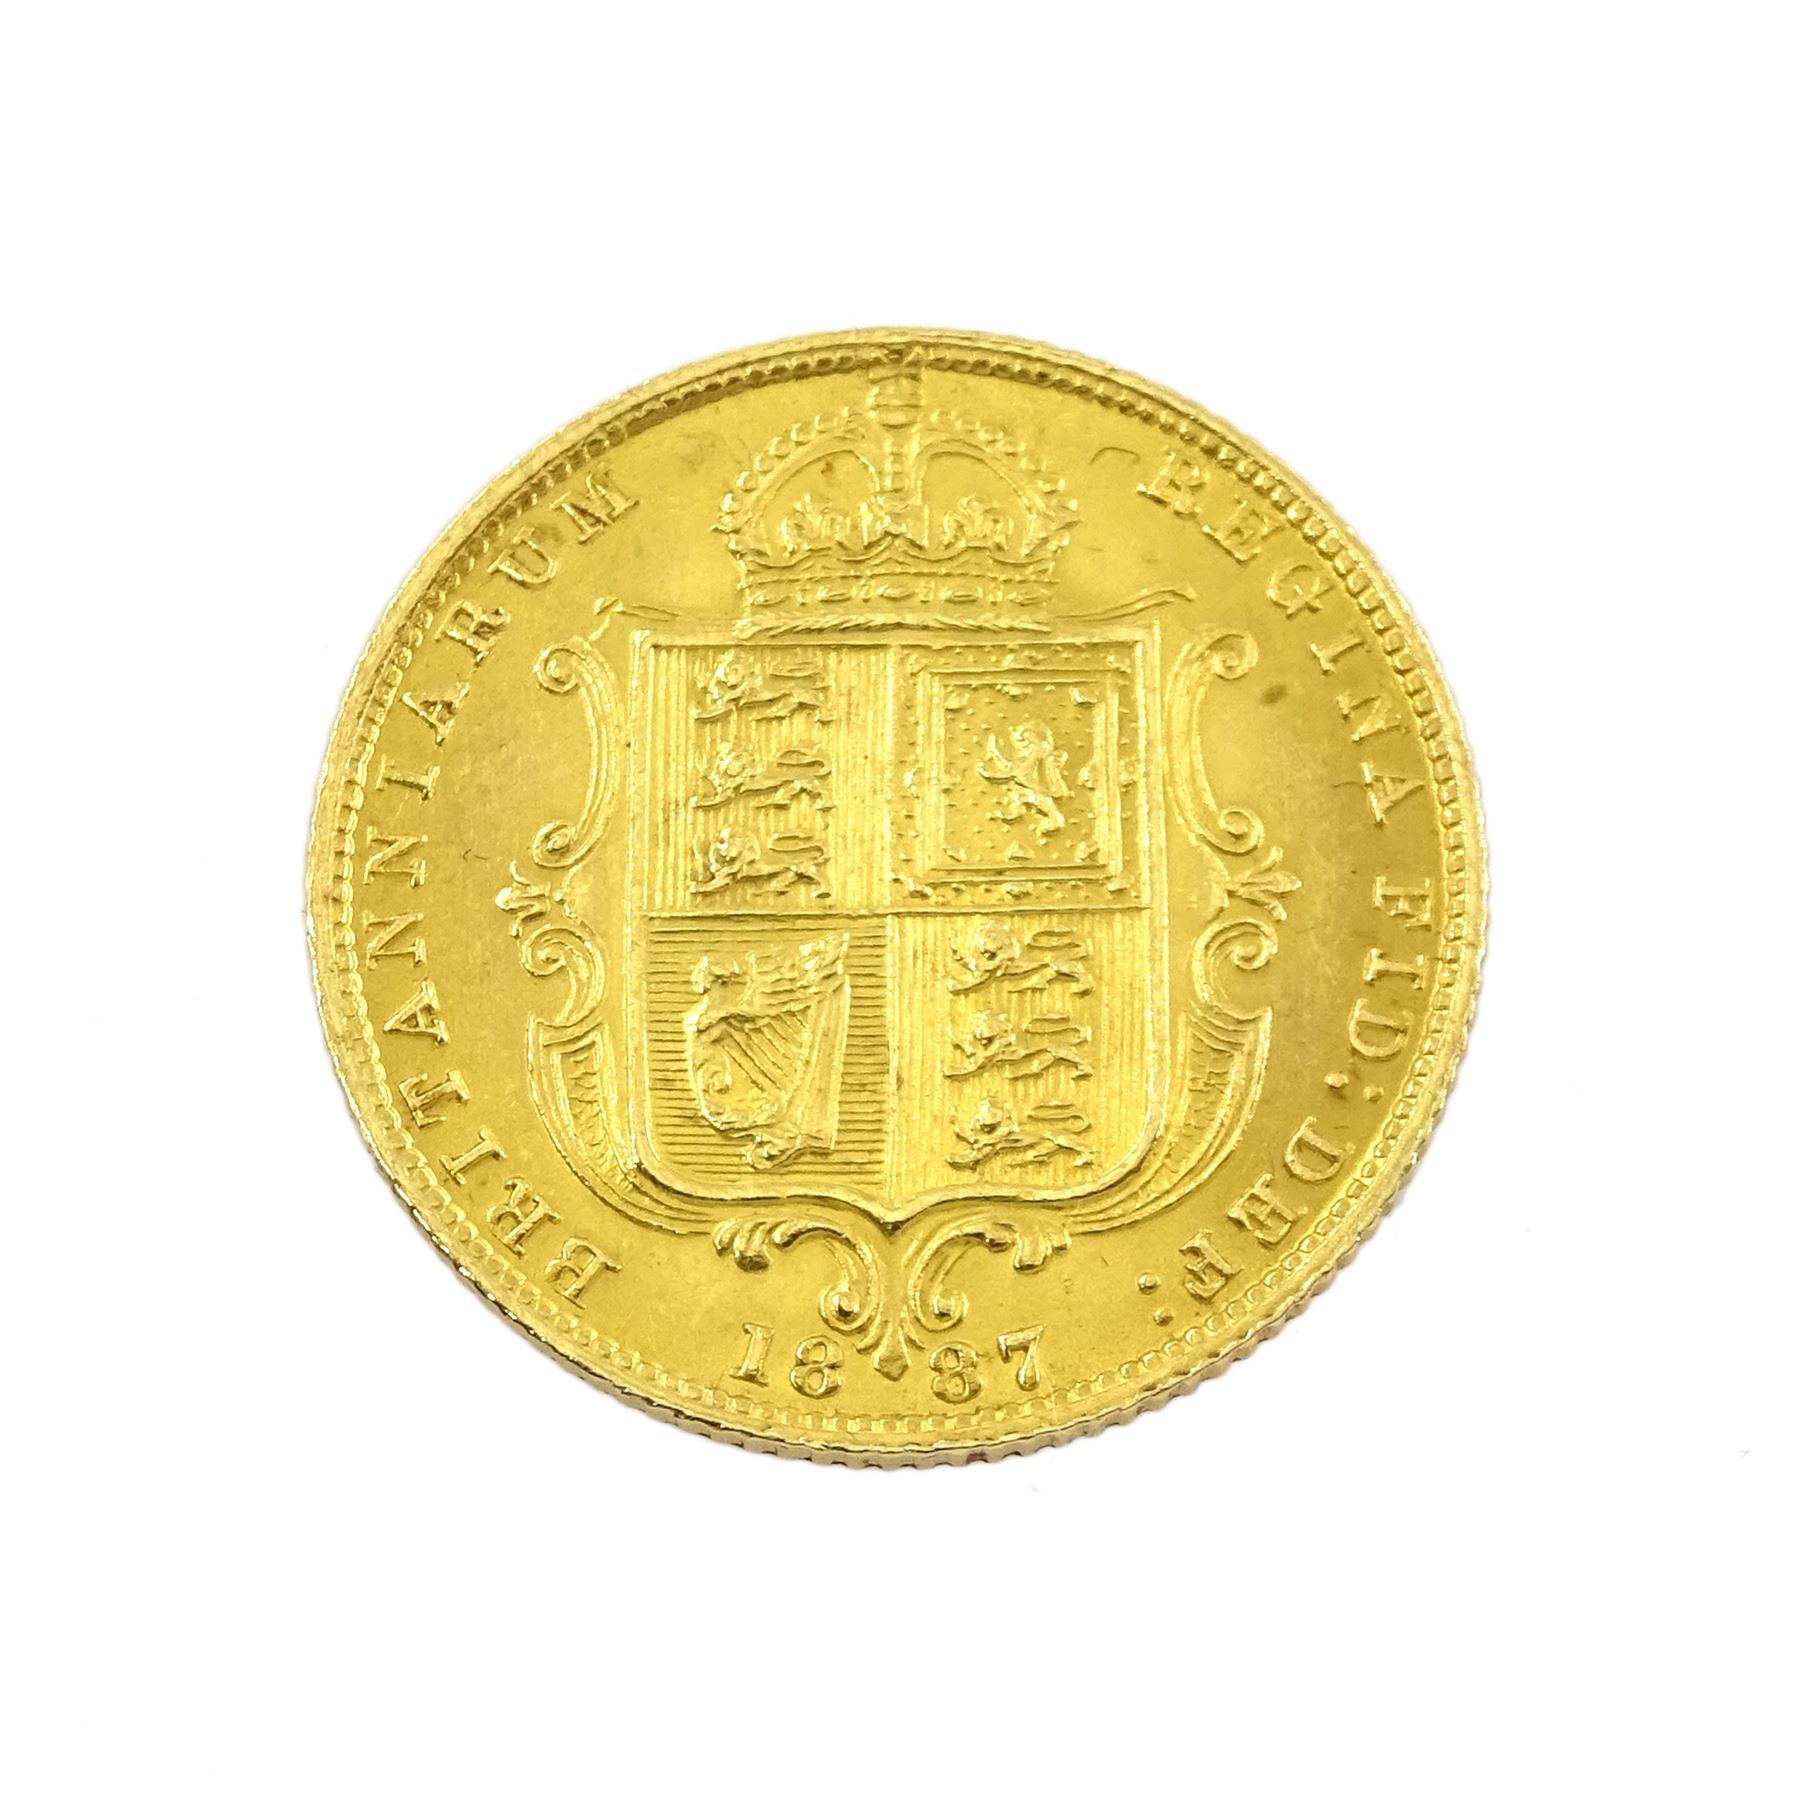 Queen Victoria 1887 specimen coin set - Image 12 of 27